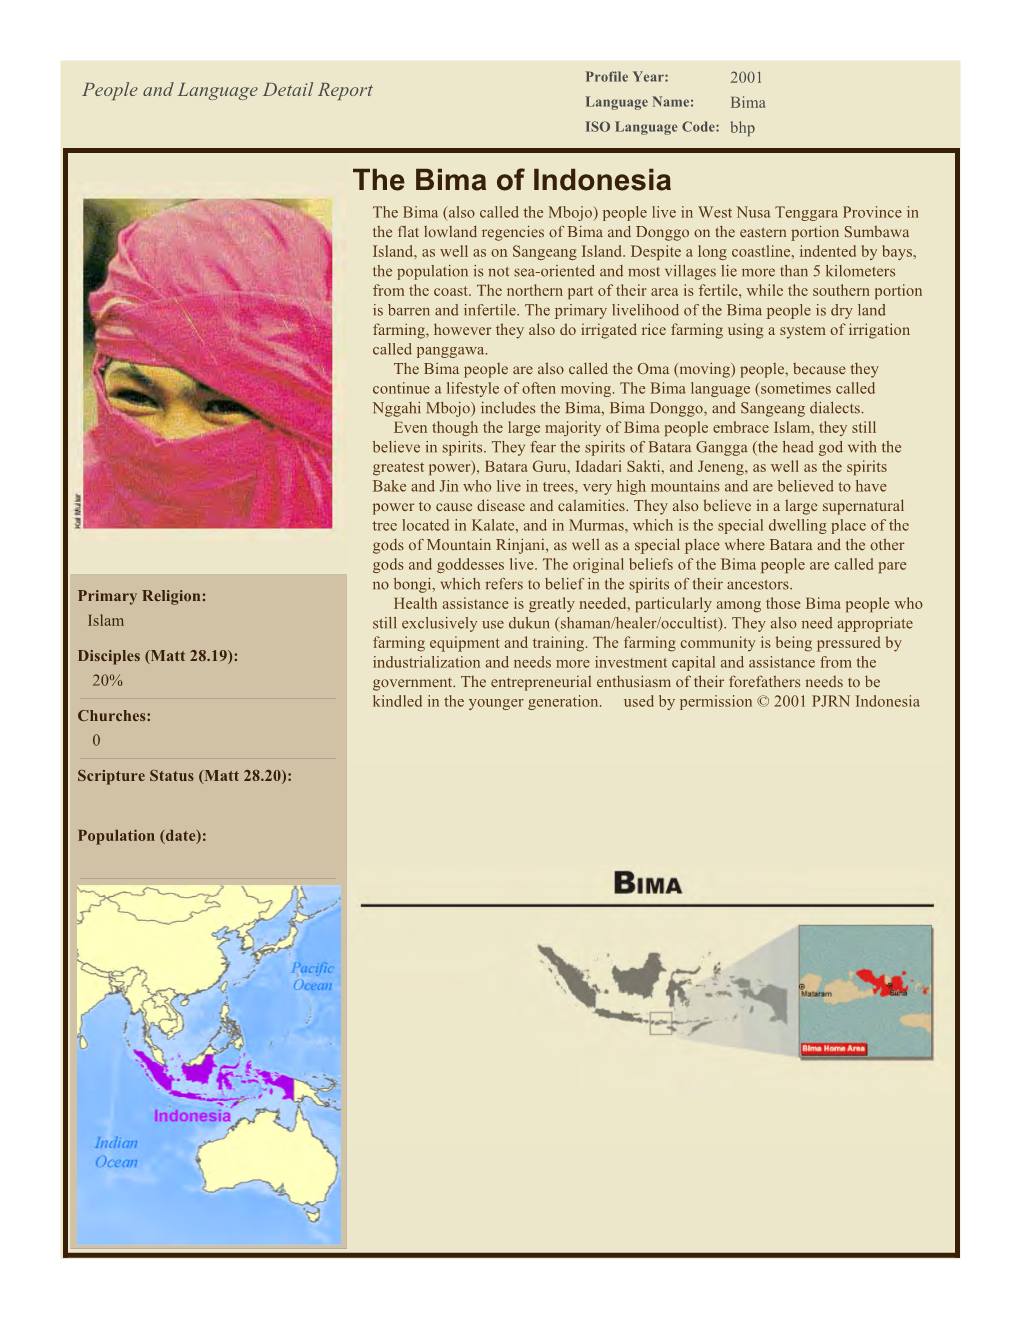 The Bima of Indonesia